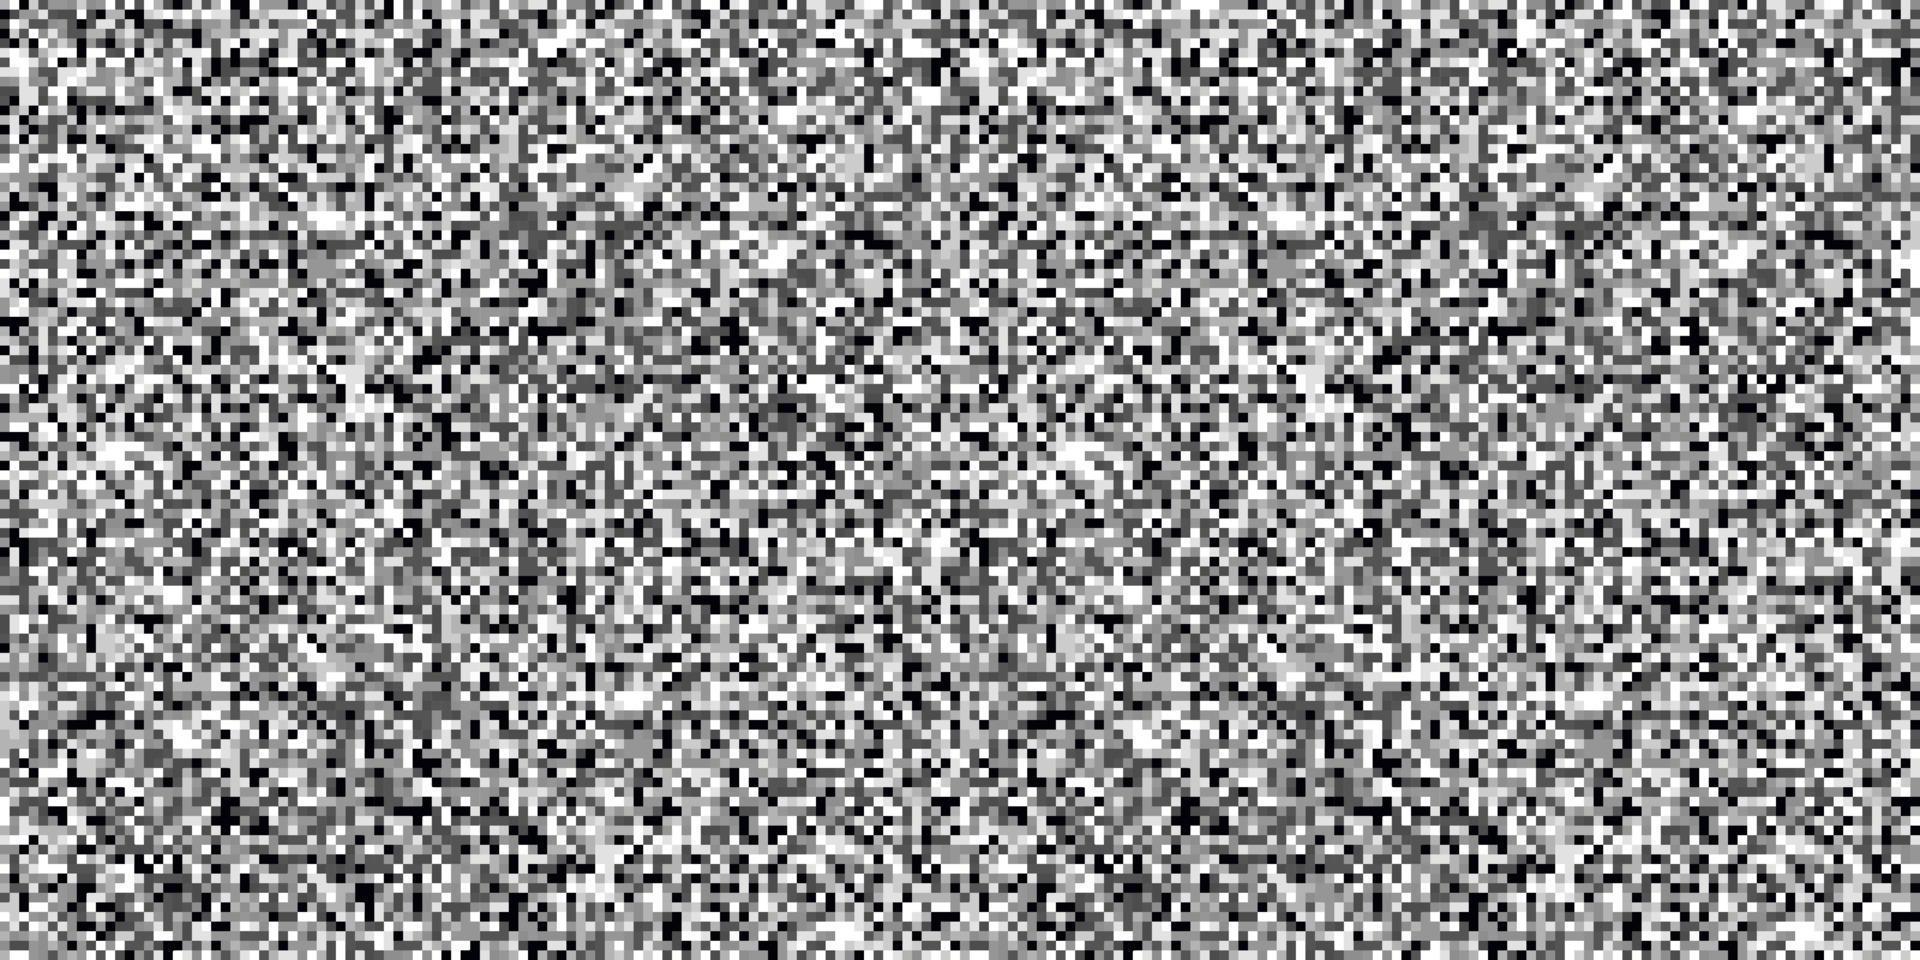 TV screen noise pixel glitch texture background vector illustration.